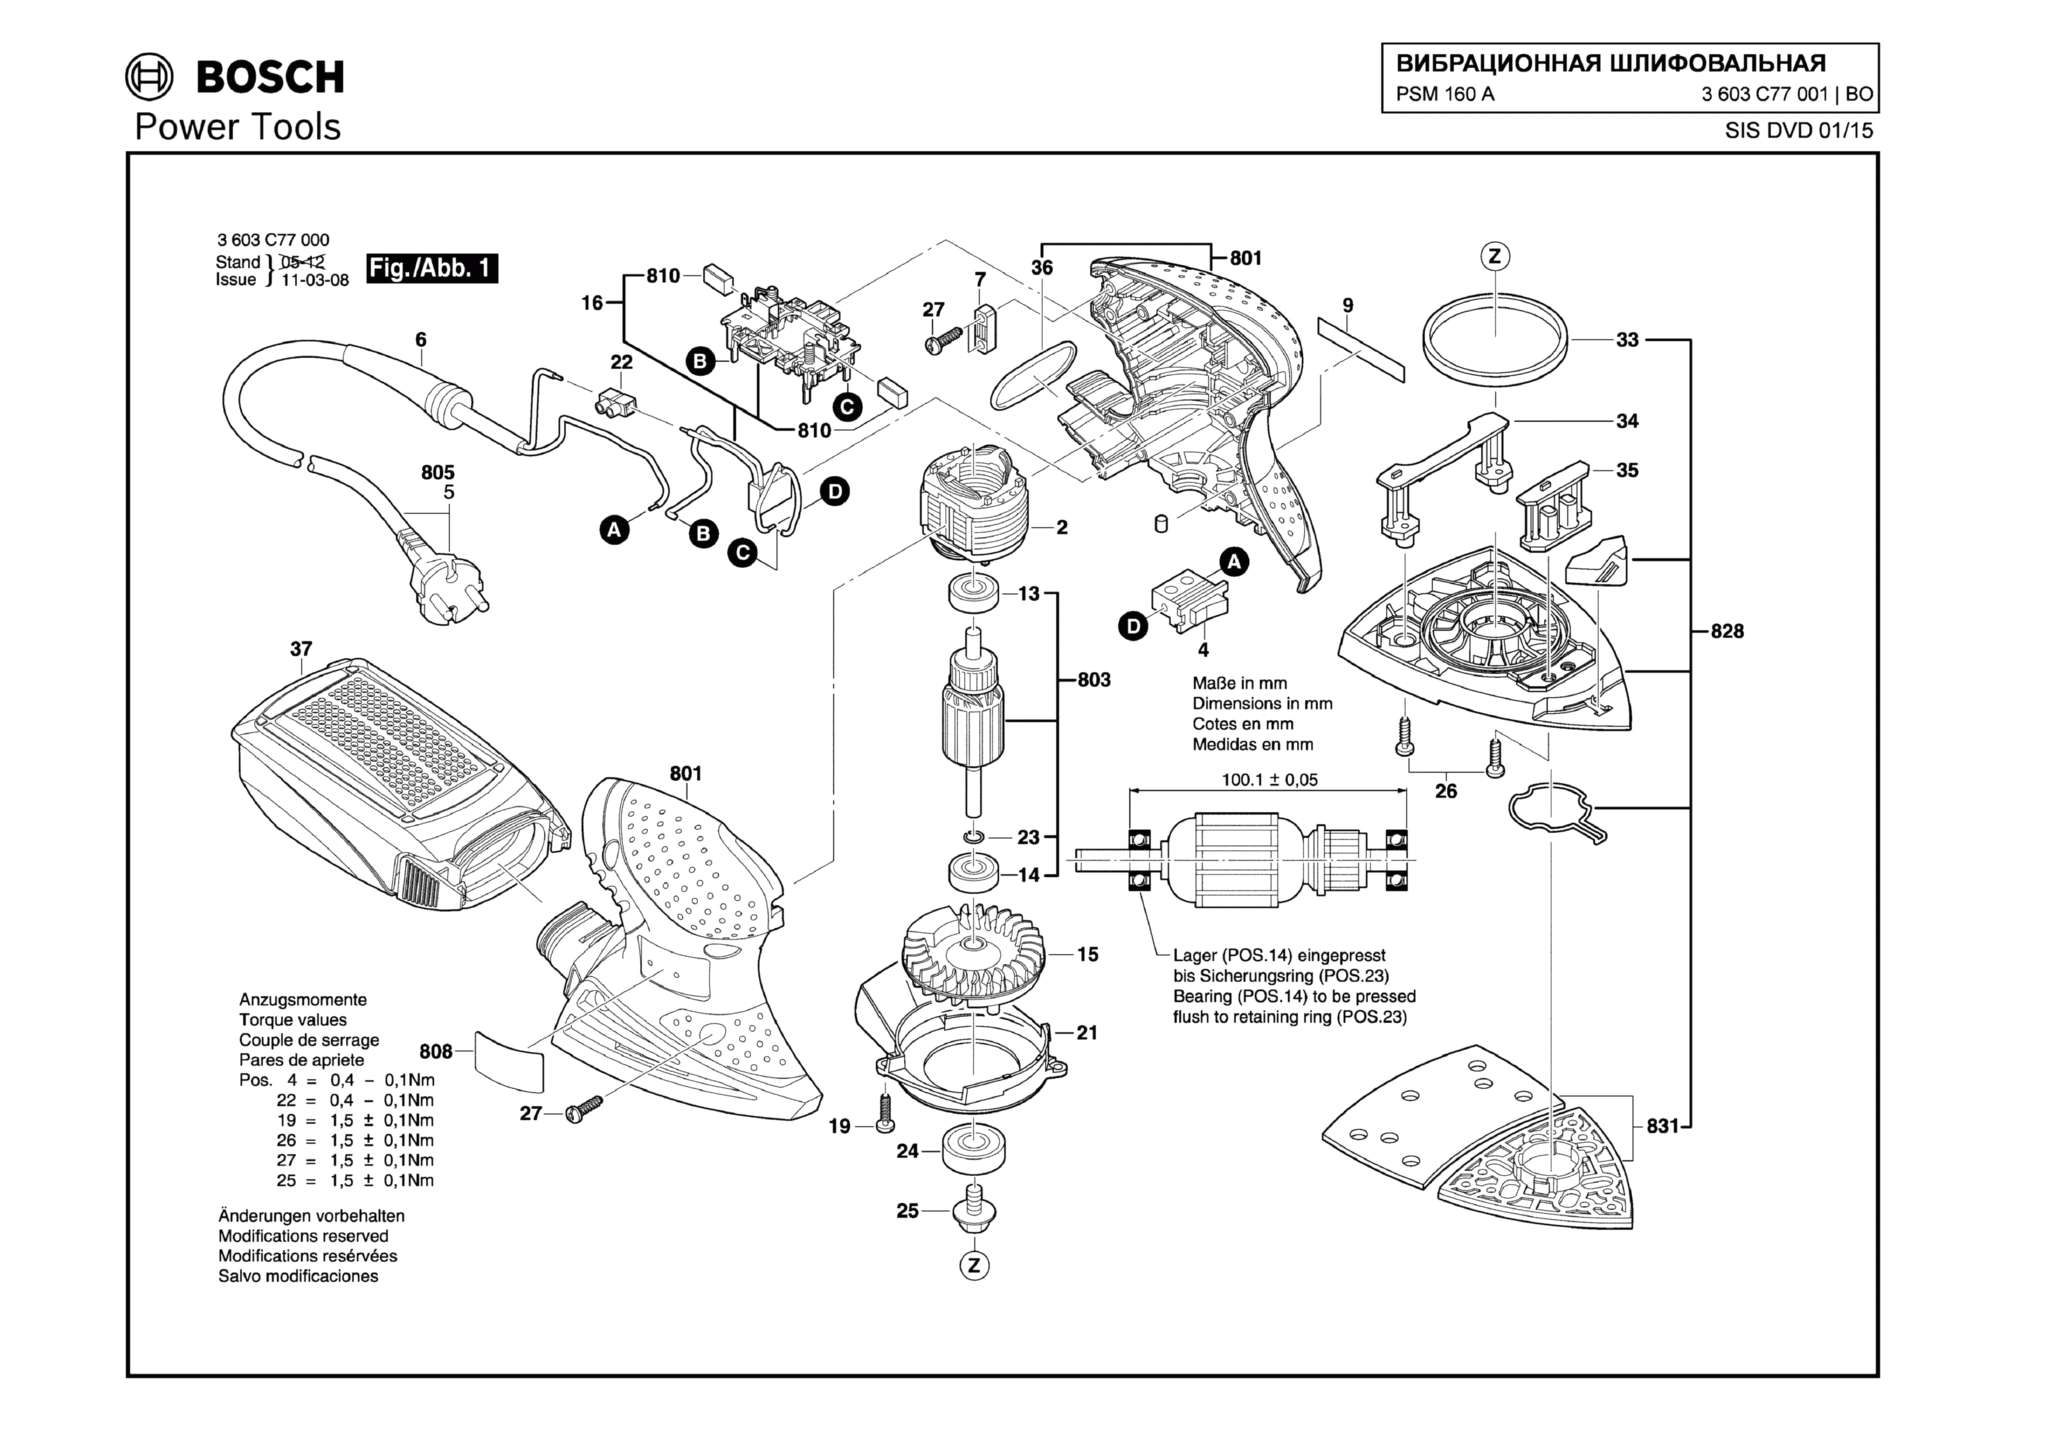 Запчасти, схема и деталировка Bosch PSM 160 A (ТИП 3603C77001)